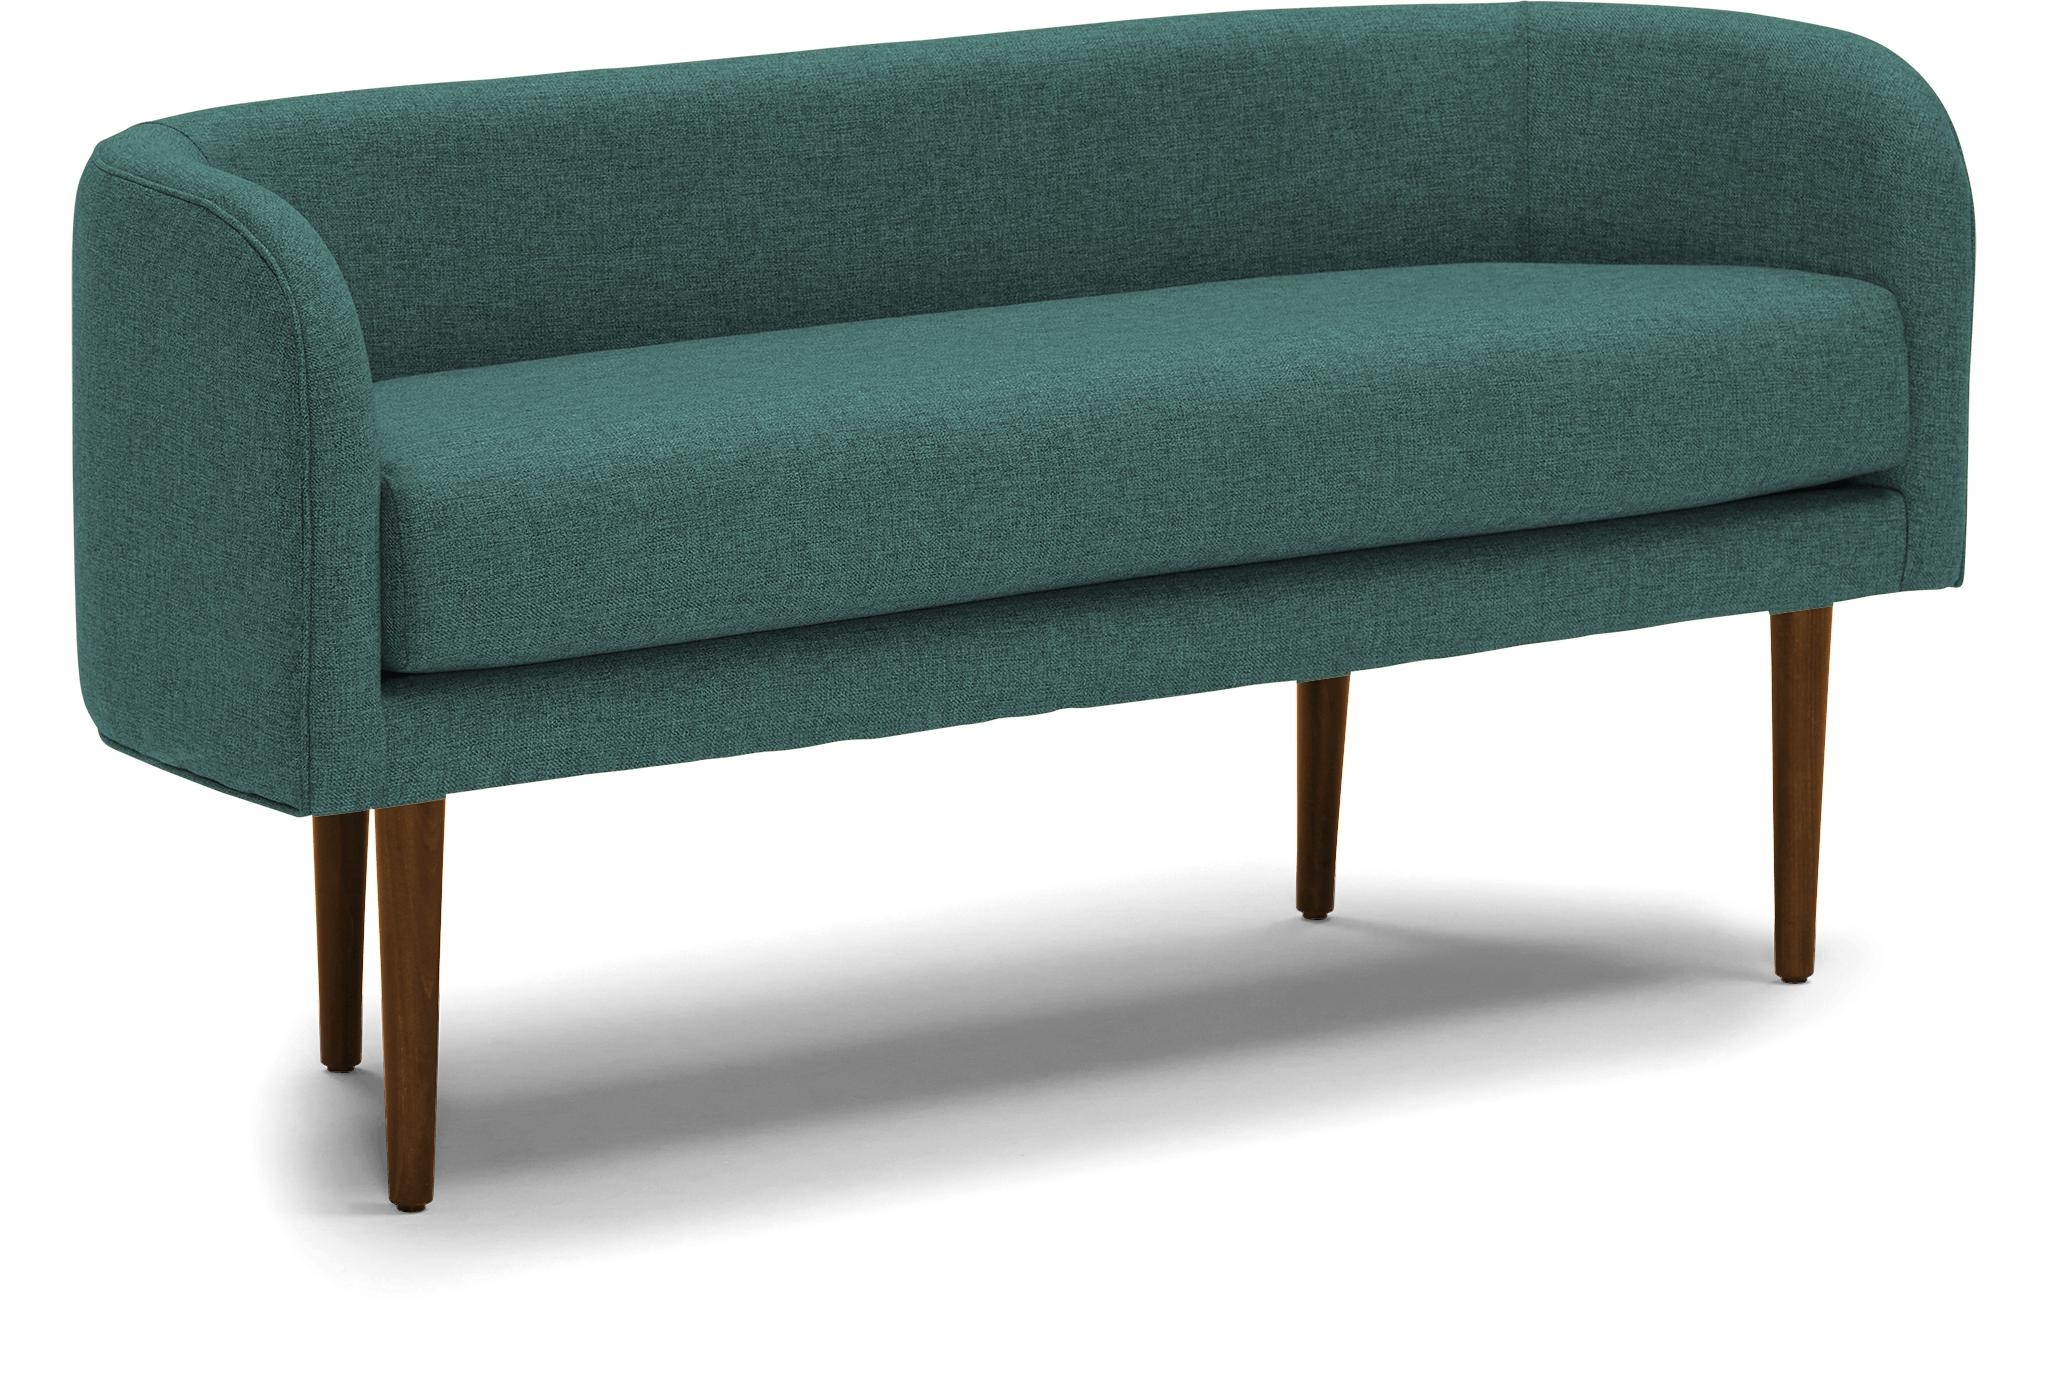 Green Elsie Mid Century Modern Bench - Essence Aqua - Mocha - Image 1